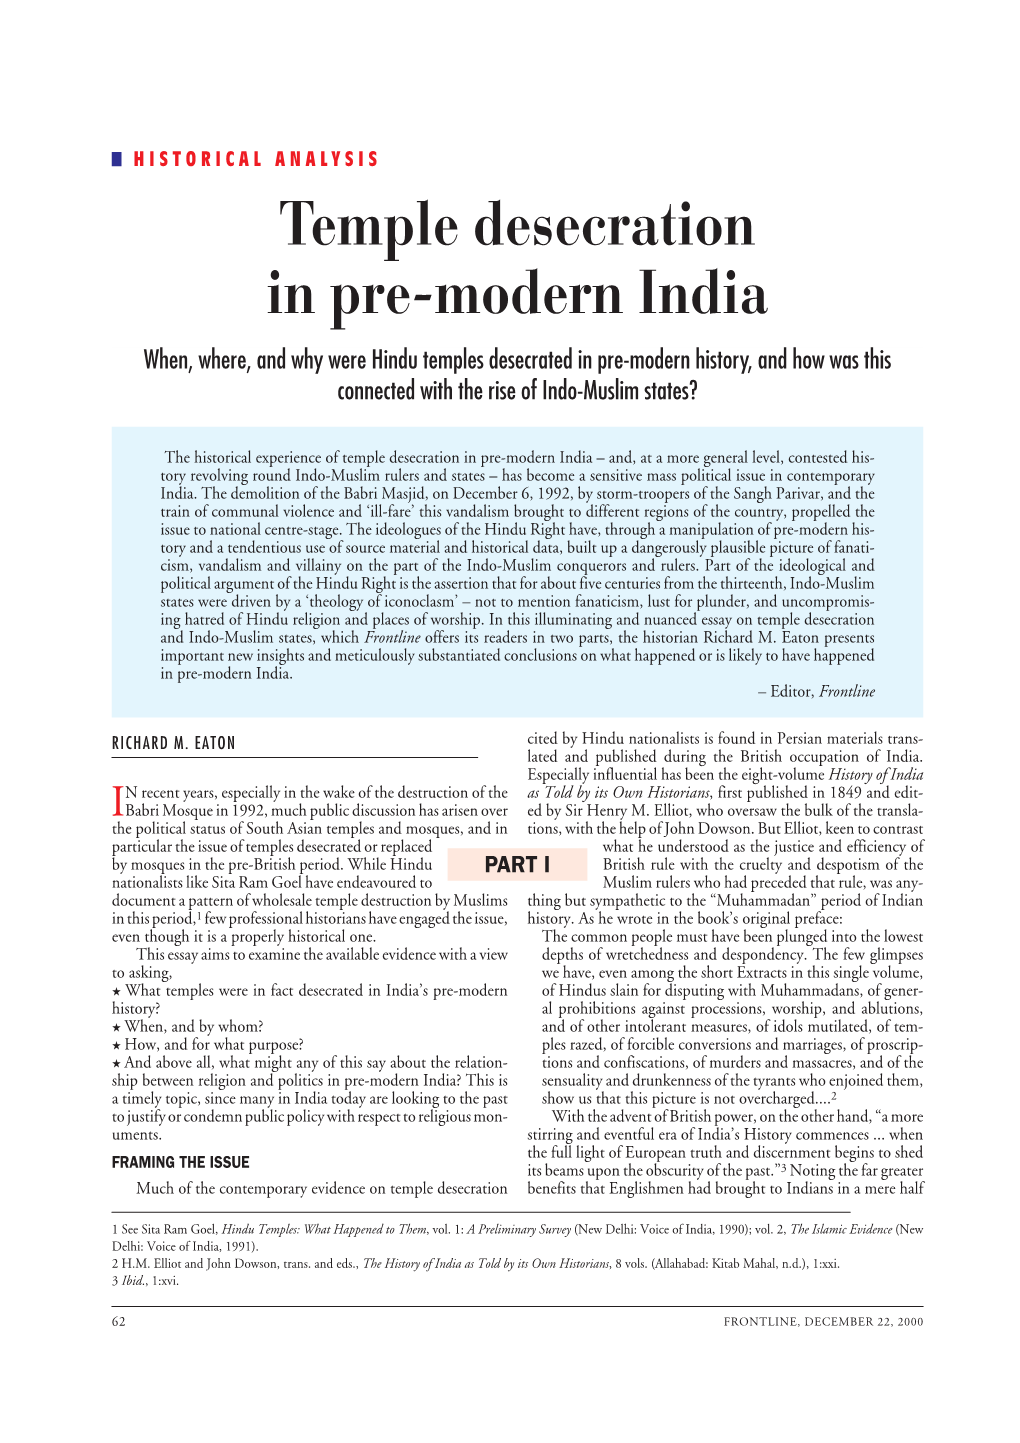 Temple Desecration in Pre-Modern India